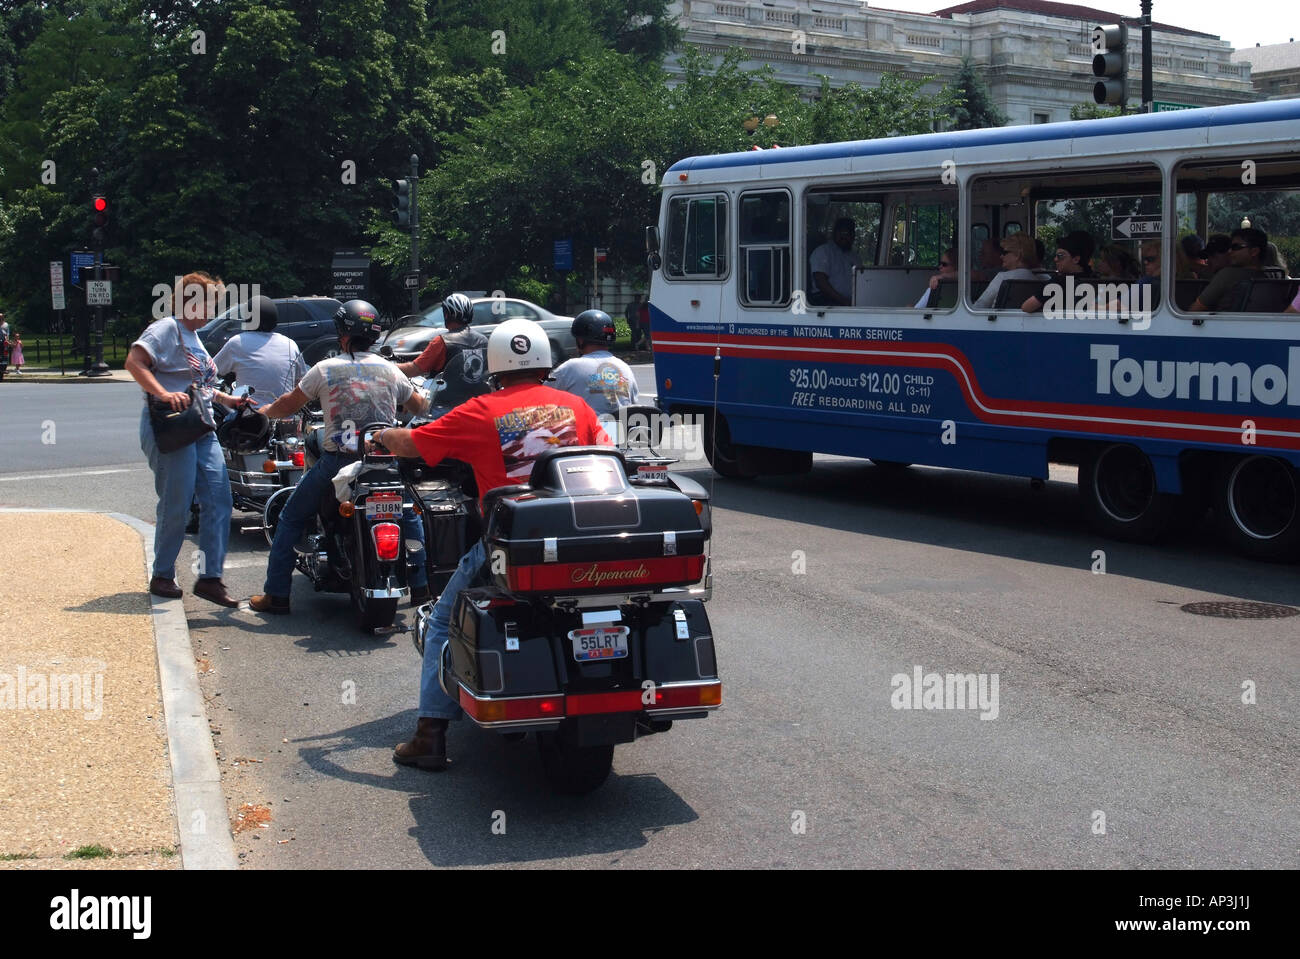 Tourmobile Sightseeing Bus and Motorbikes Near Independence Avenue in Washington DC United States America Stock Photo